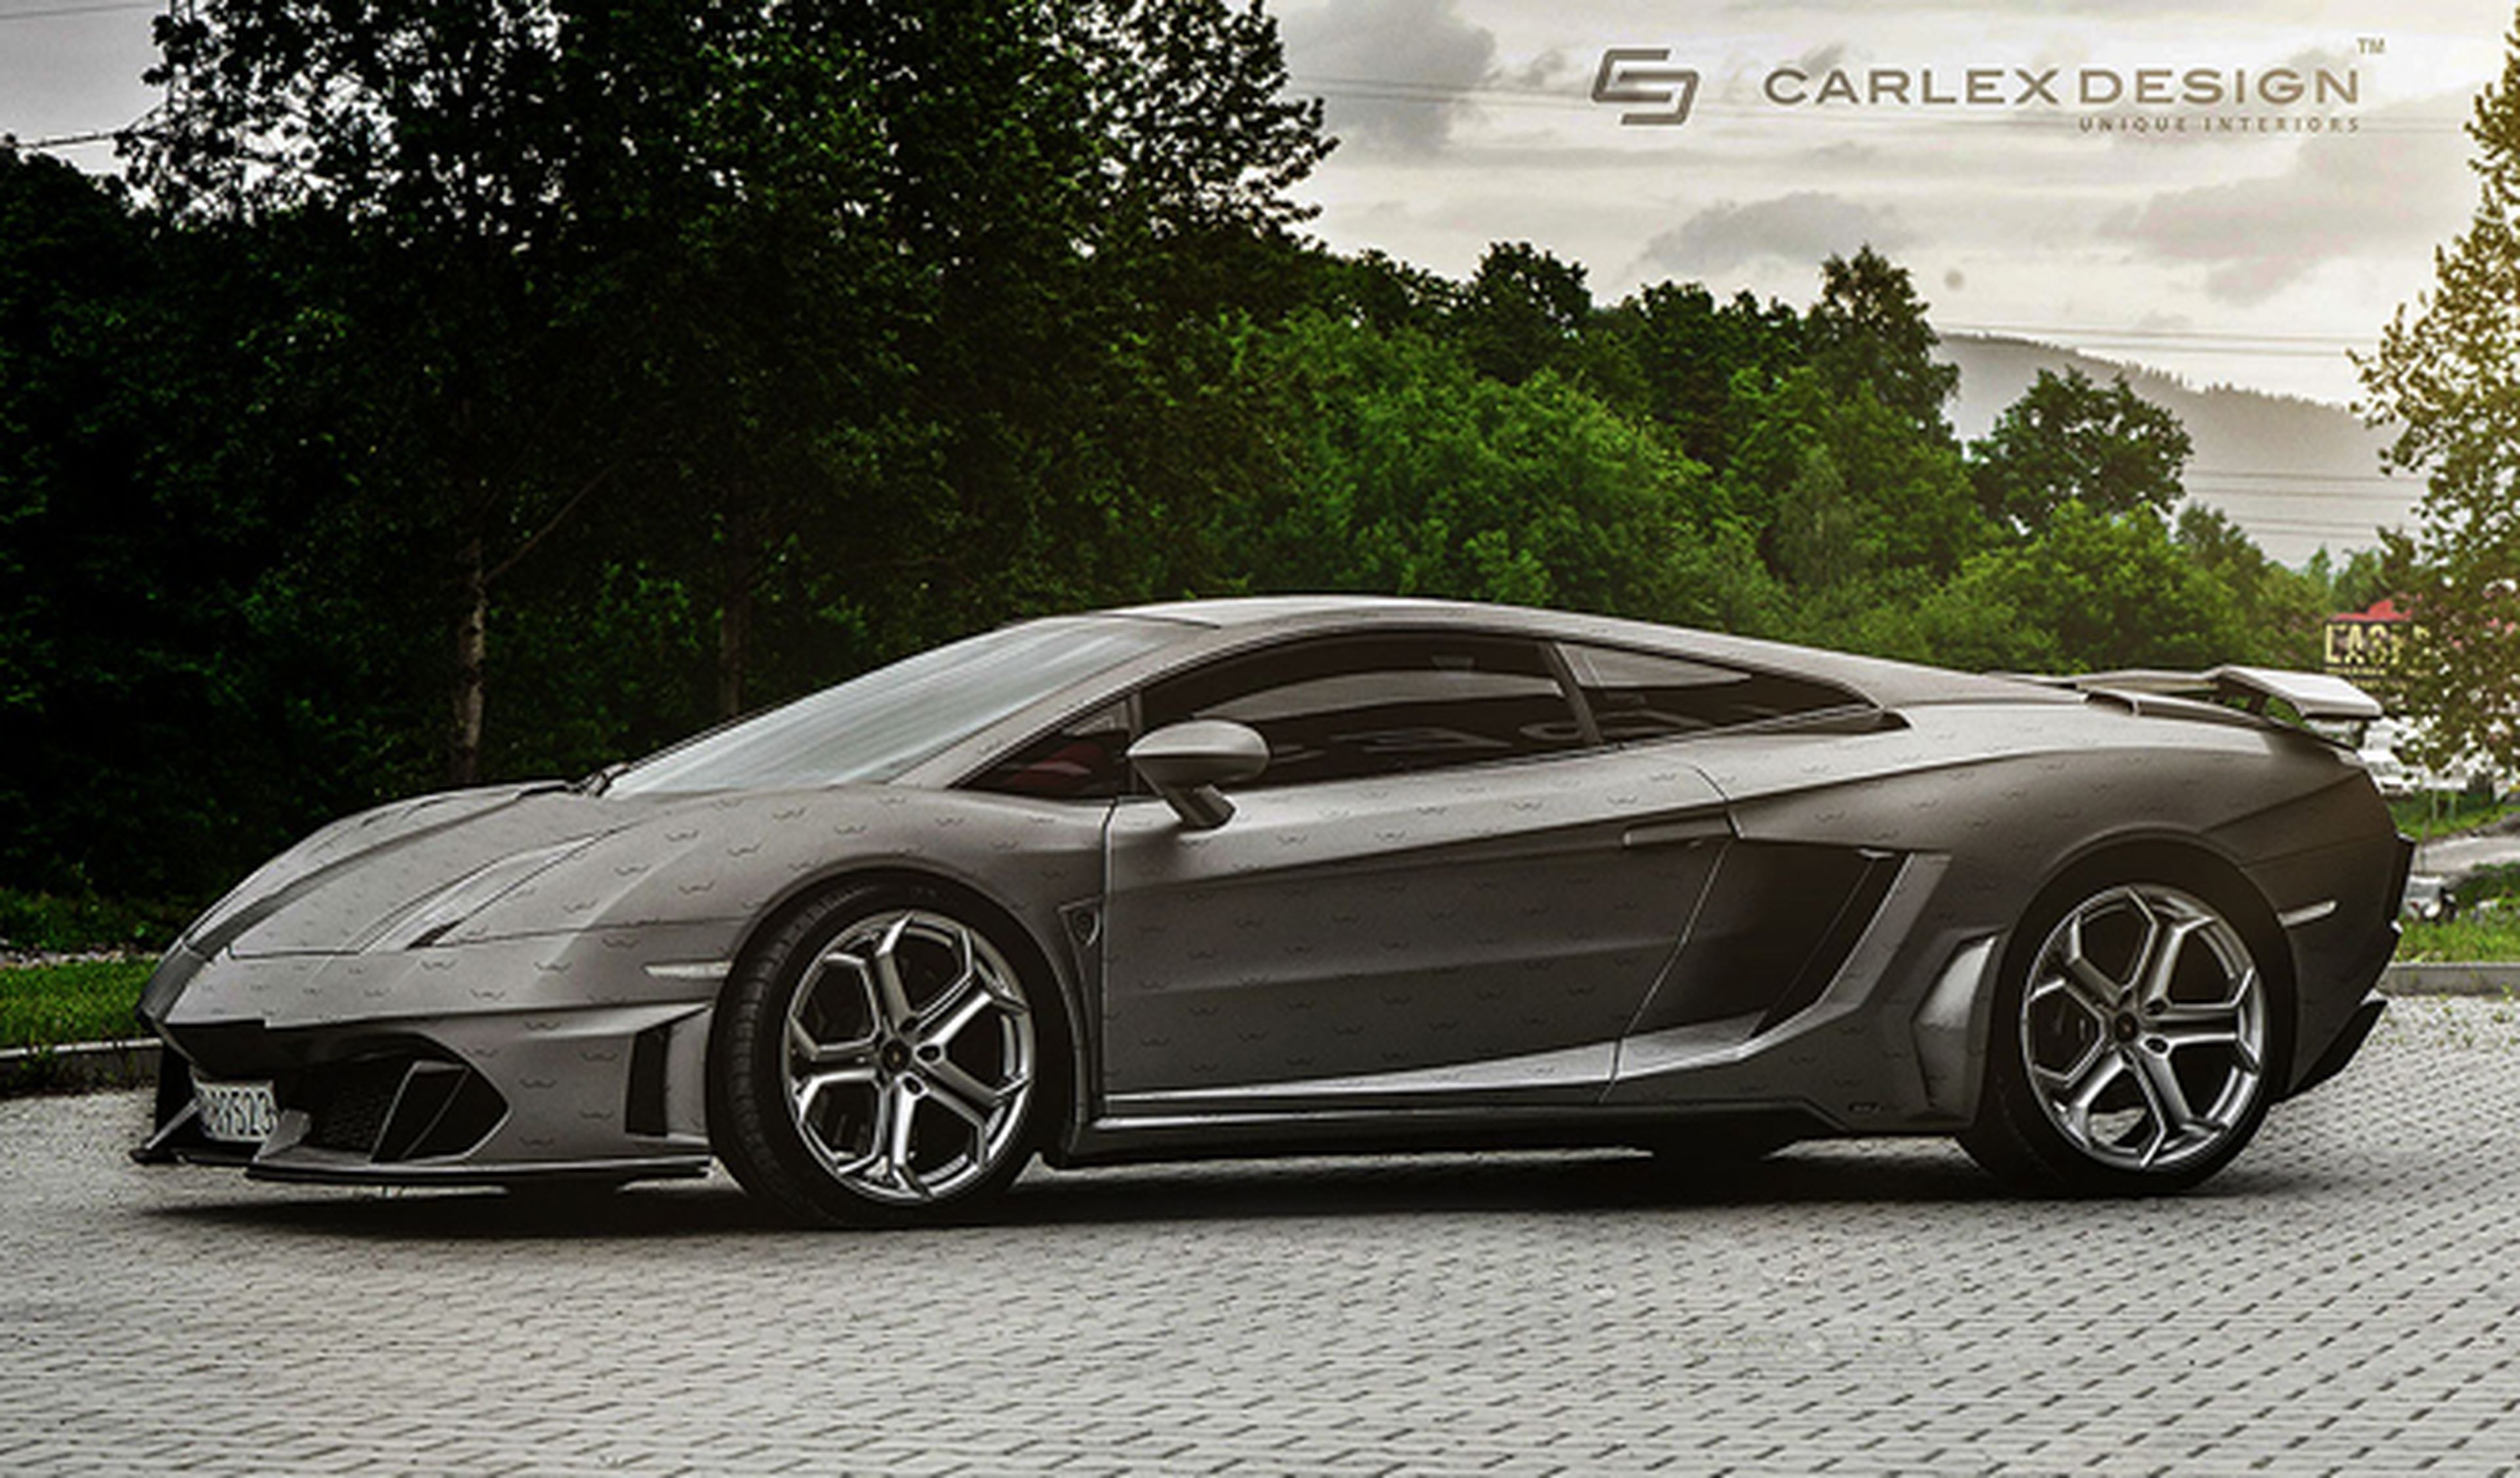 Lamborghini Gallardo Carlex Design lateral